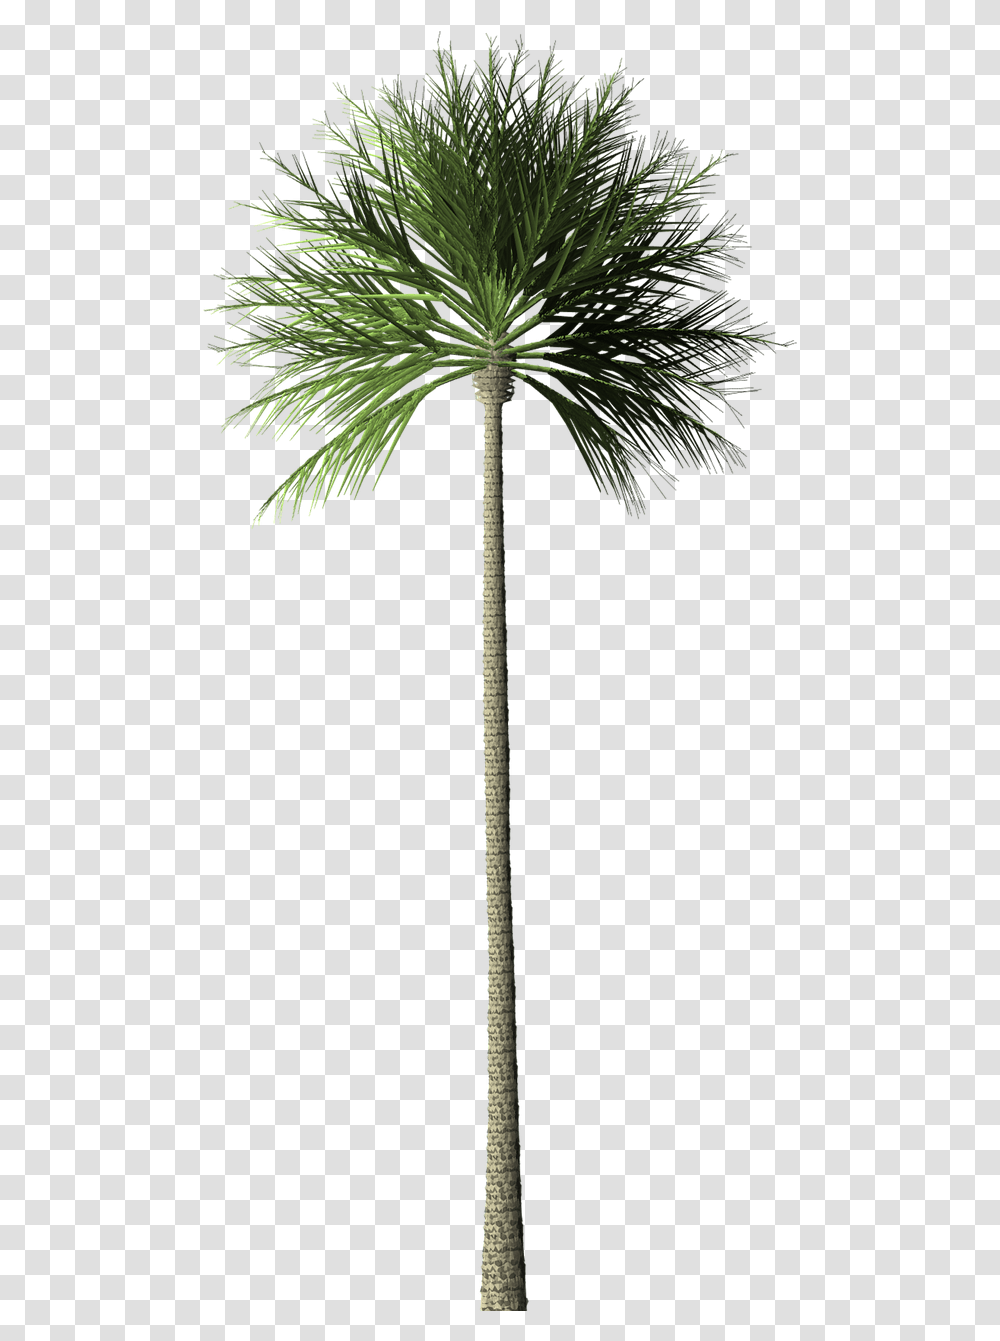 Palm Tree Free Image On Pixabay Pohon Palem, Plant, Arecaceae, Leaf Transparent Png